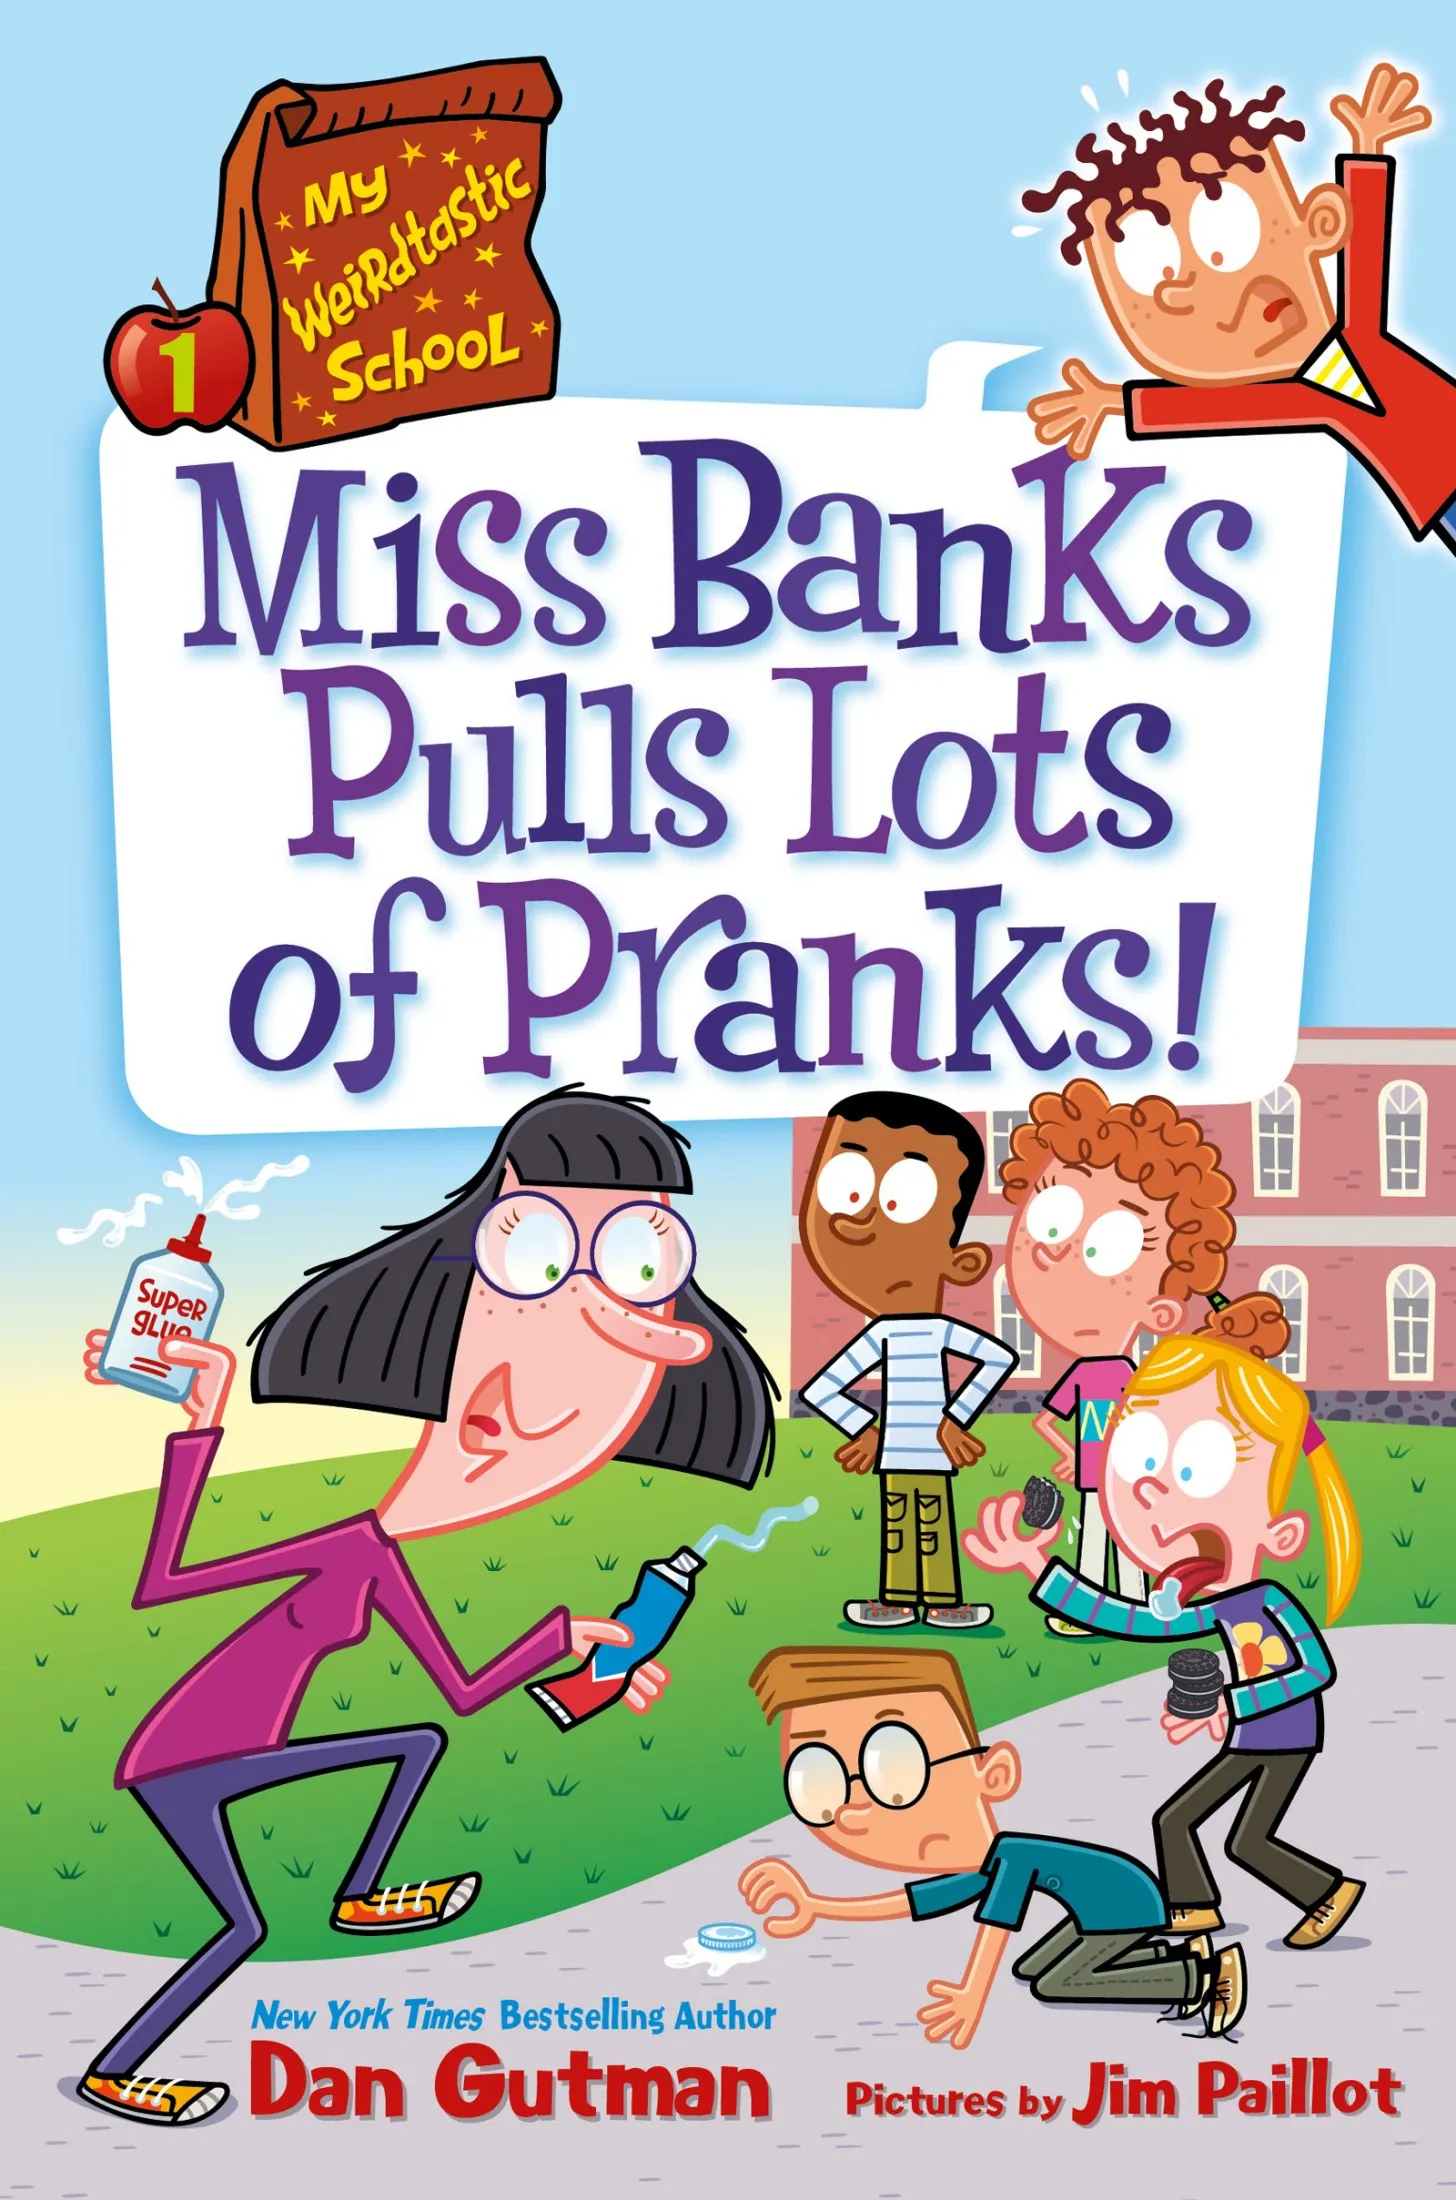 Miss Banks Pulls Lots of Pranks! (My Weirdtastic School #1)